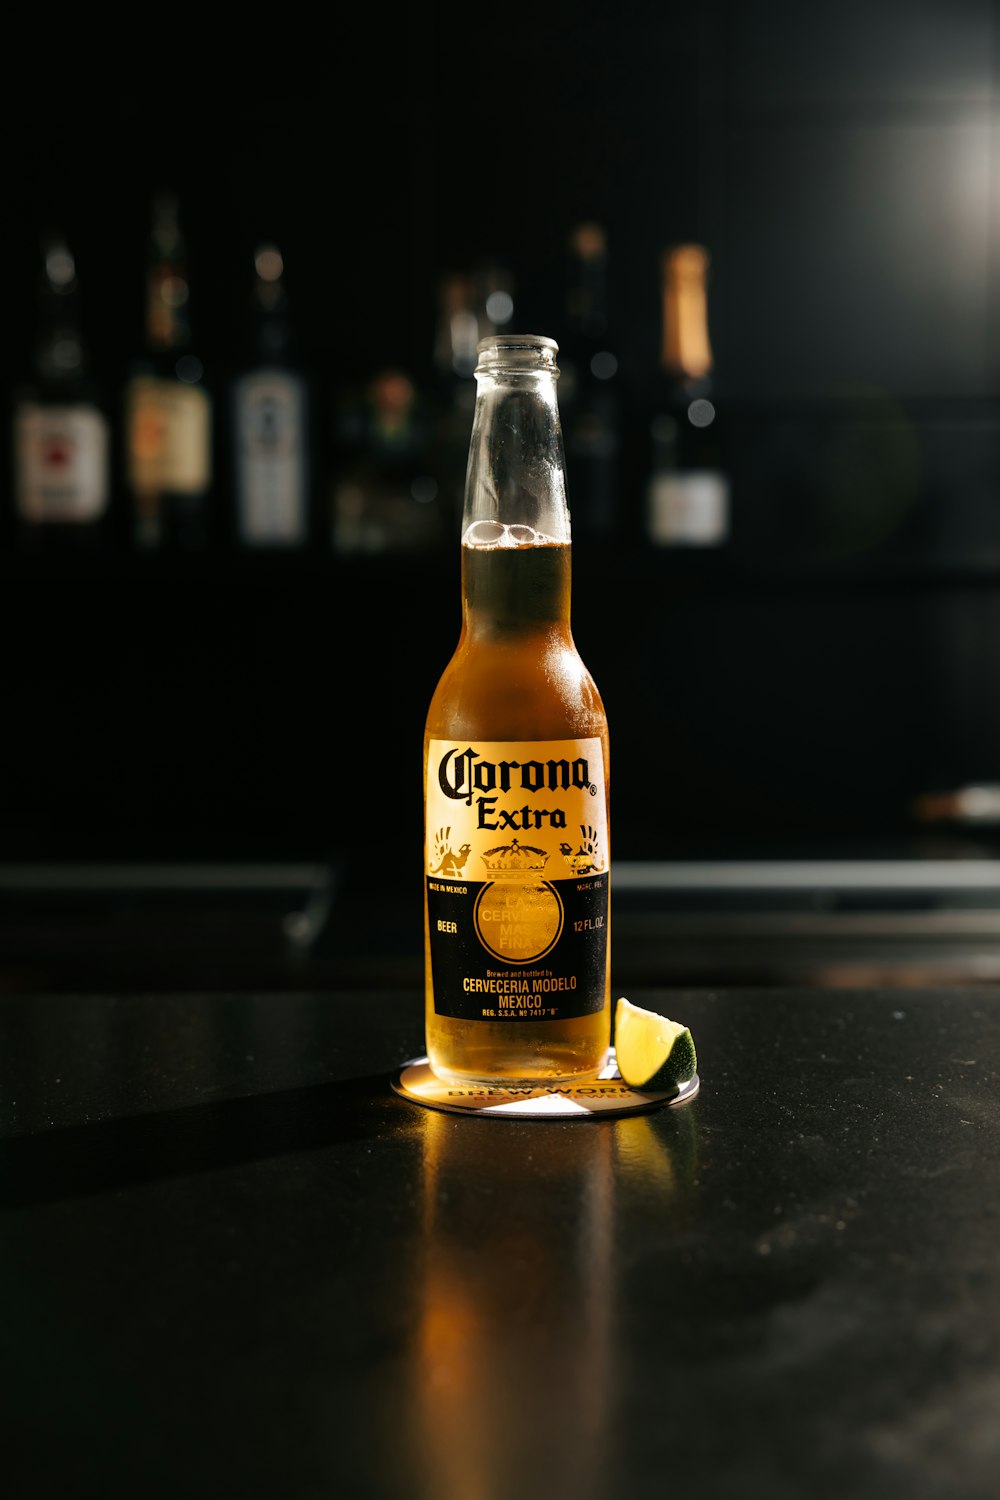 corona extra beer bottle on black table